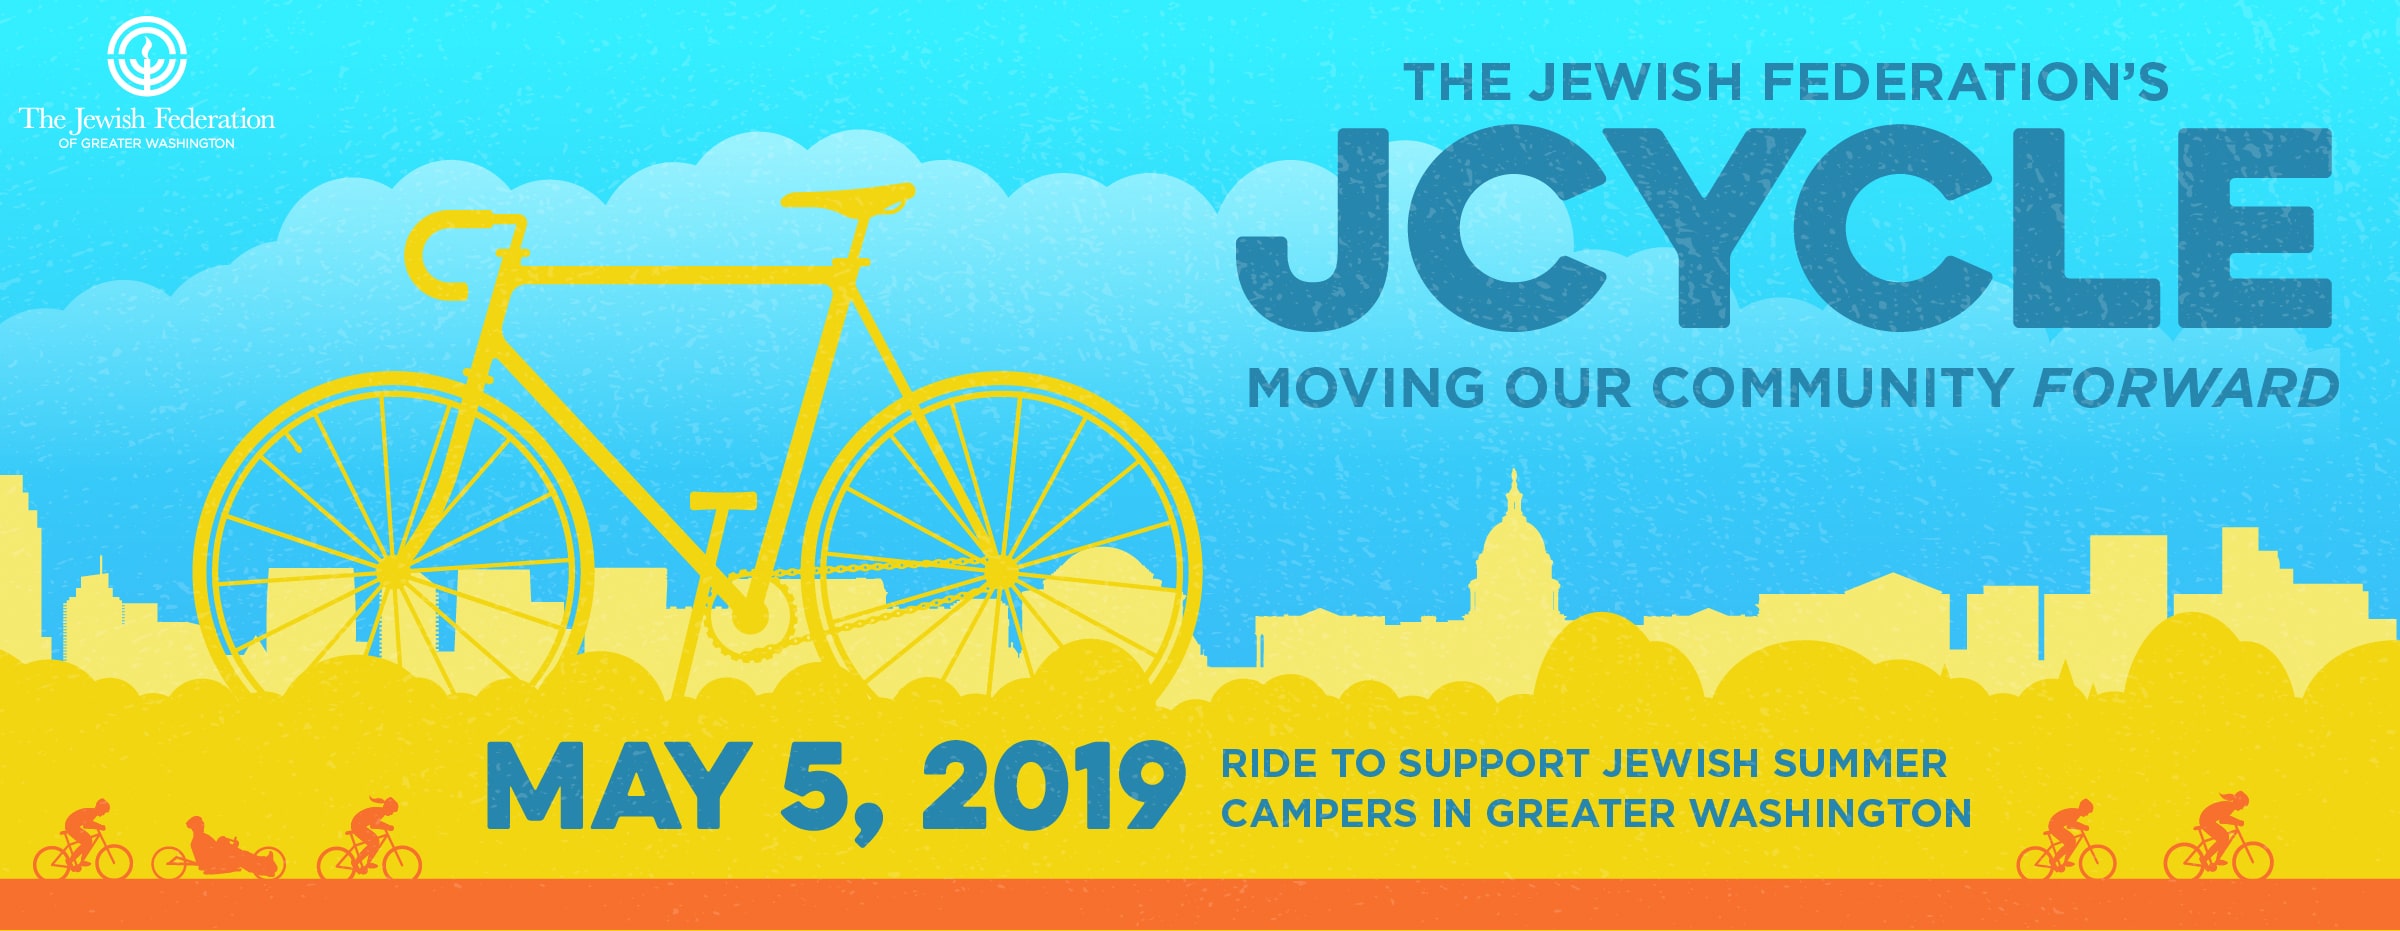 JCYCLE Community Bike Ride - Jewish Federation of Greater Washington